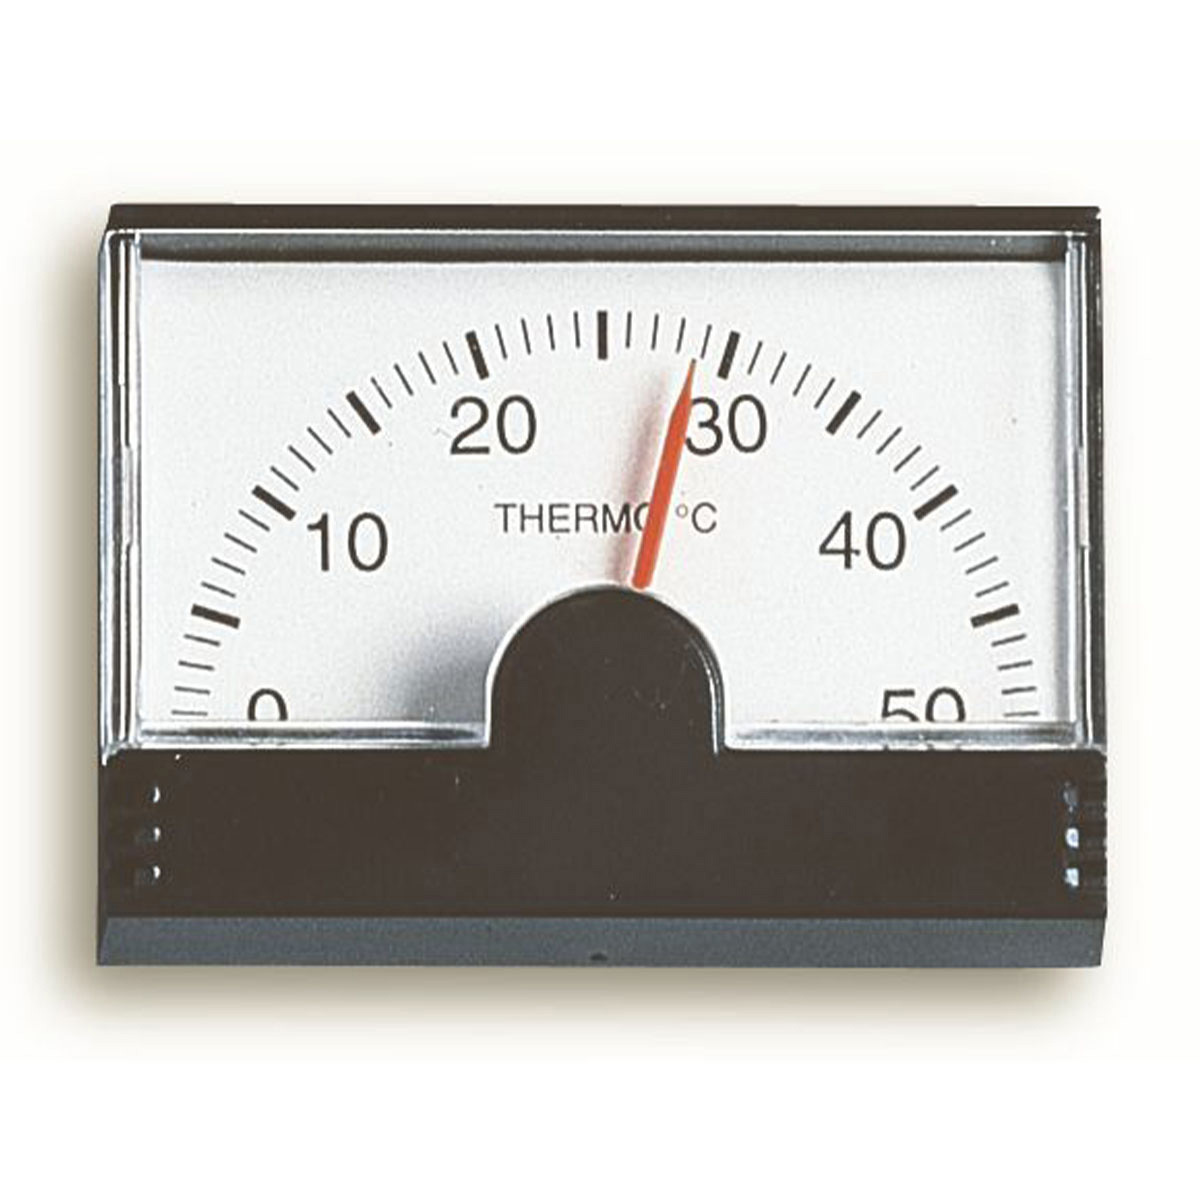 Alles für's Auge - Autothermometer analog Kunststoff Thermometer